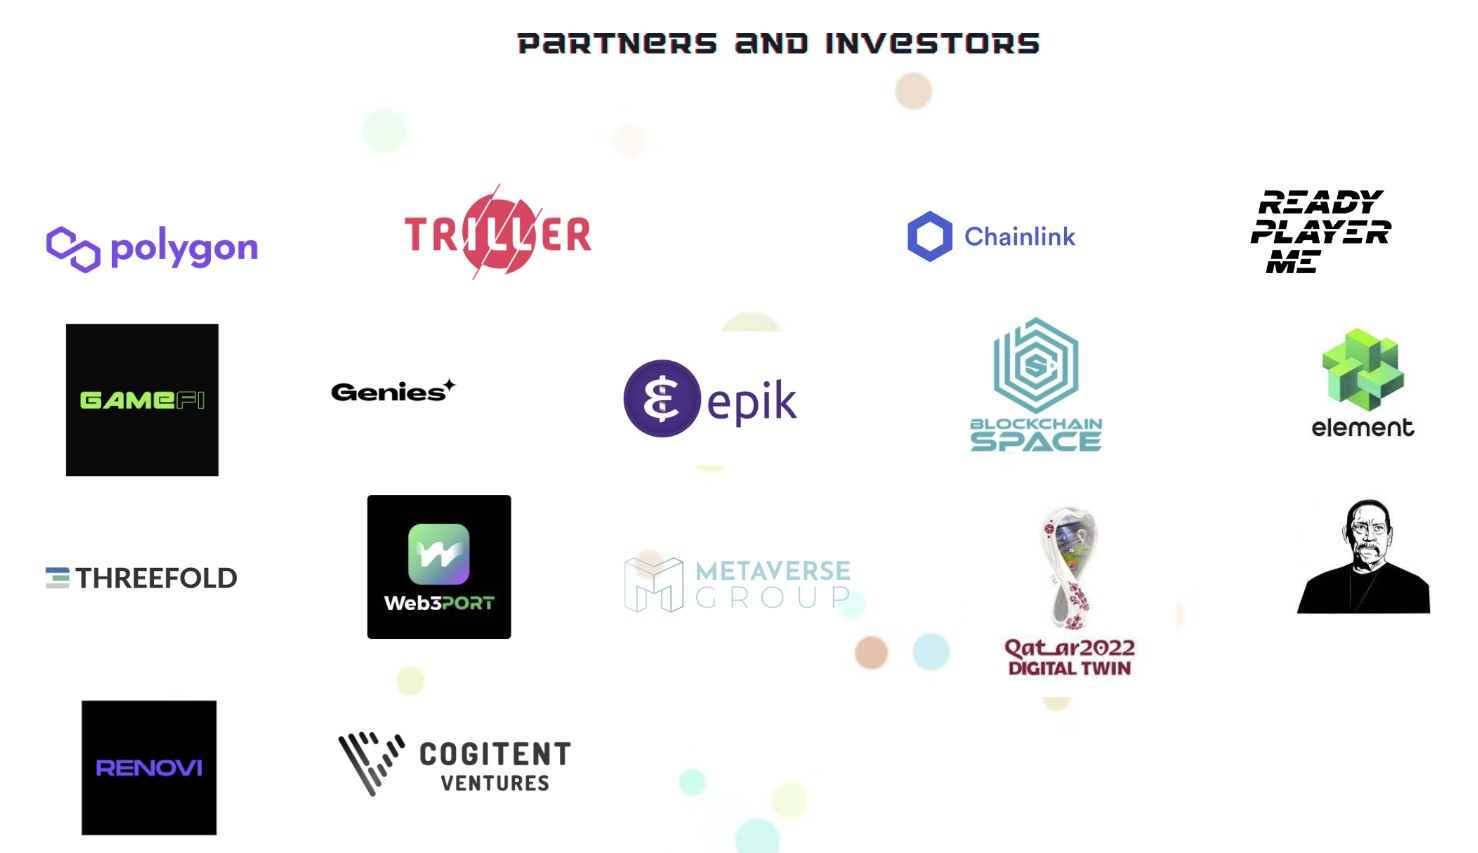 Orbofi Partners & Investors